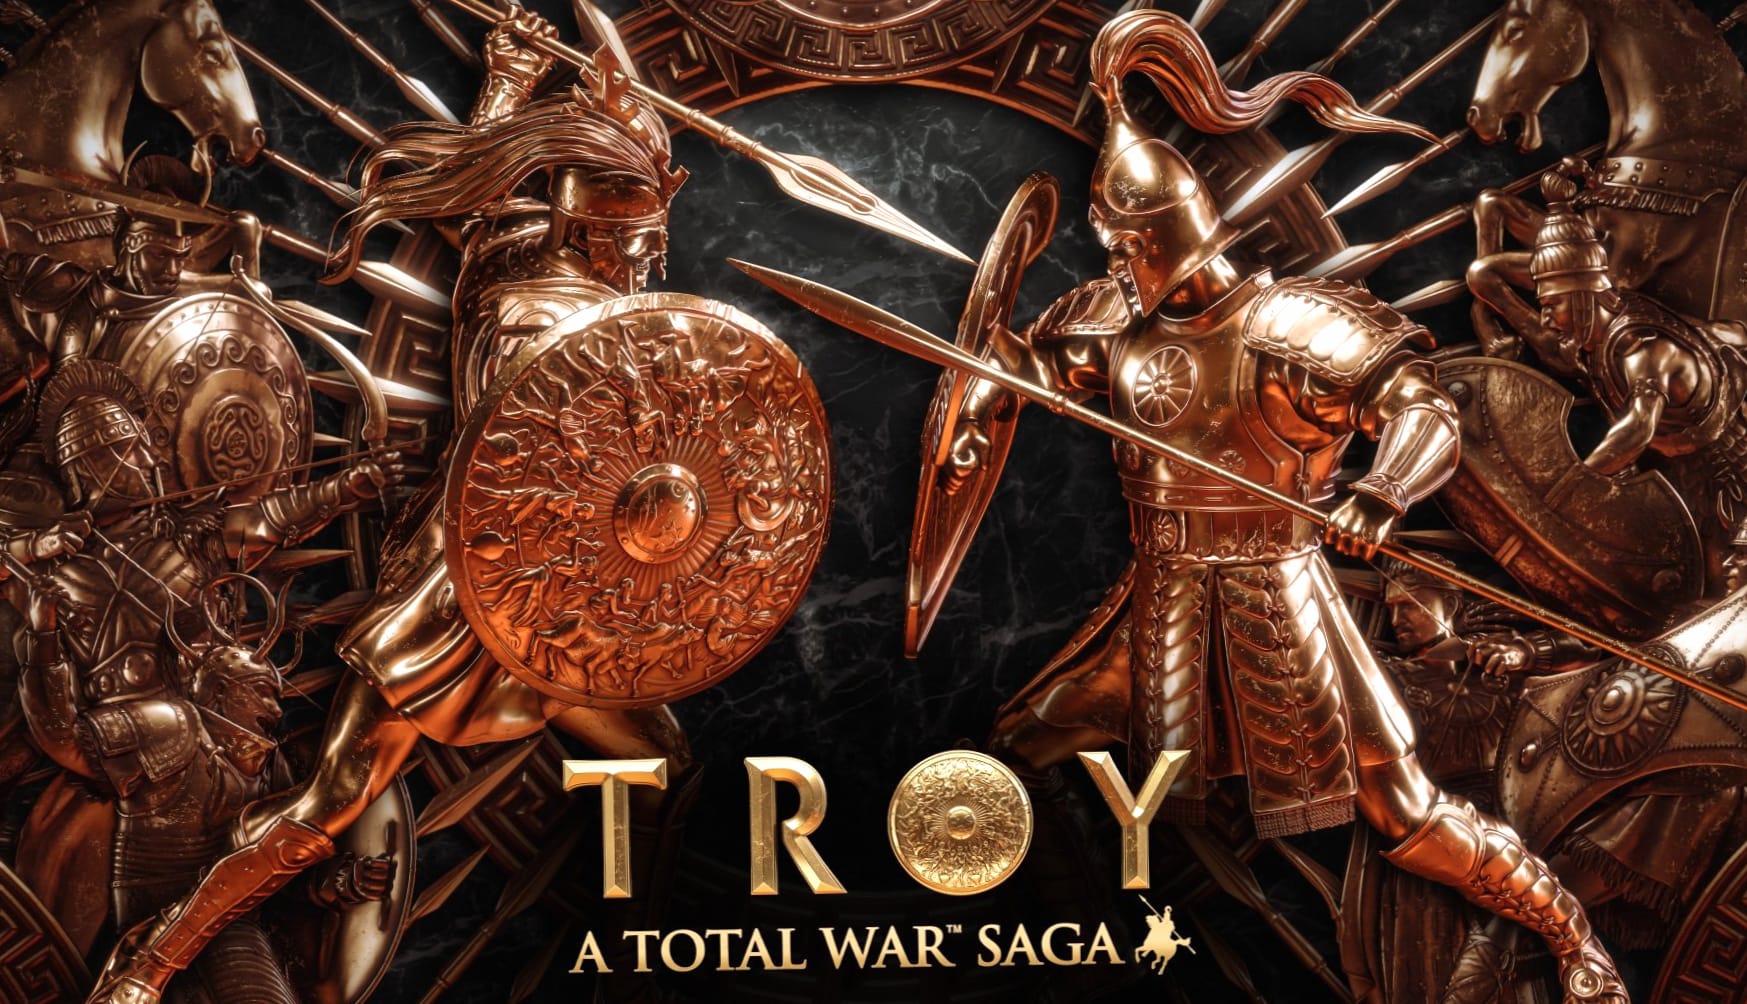 A Total War Saga TROY at 2048 x 2048 iPad size wallpapers HD quality